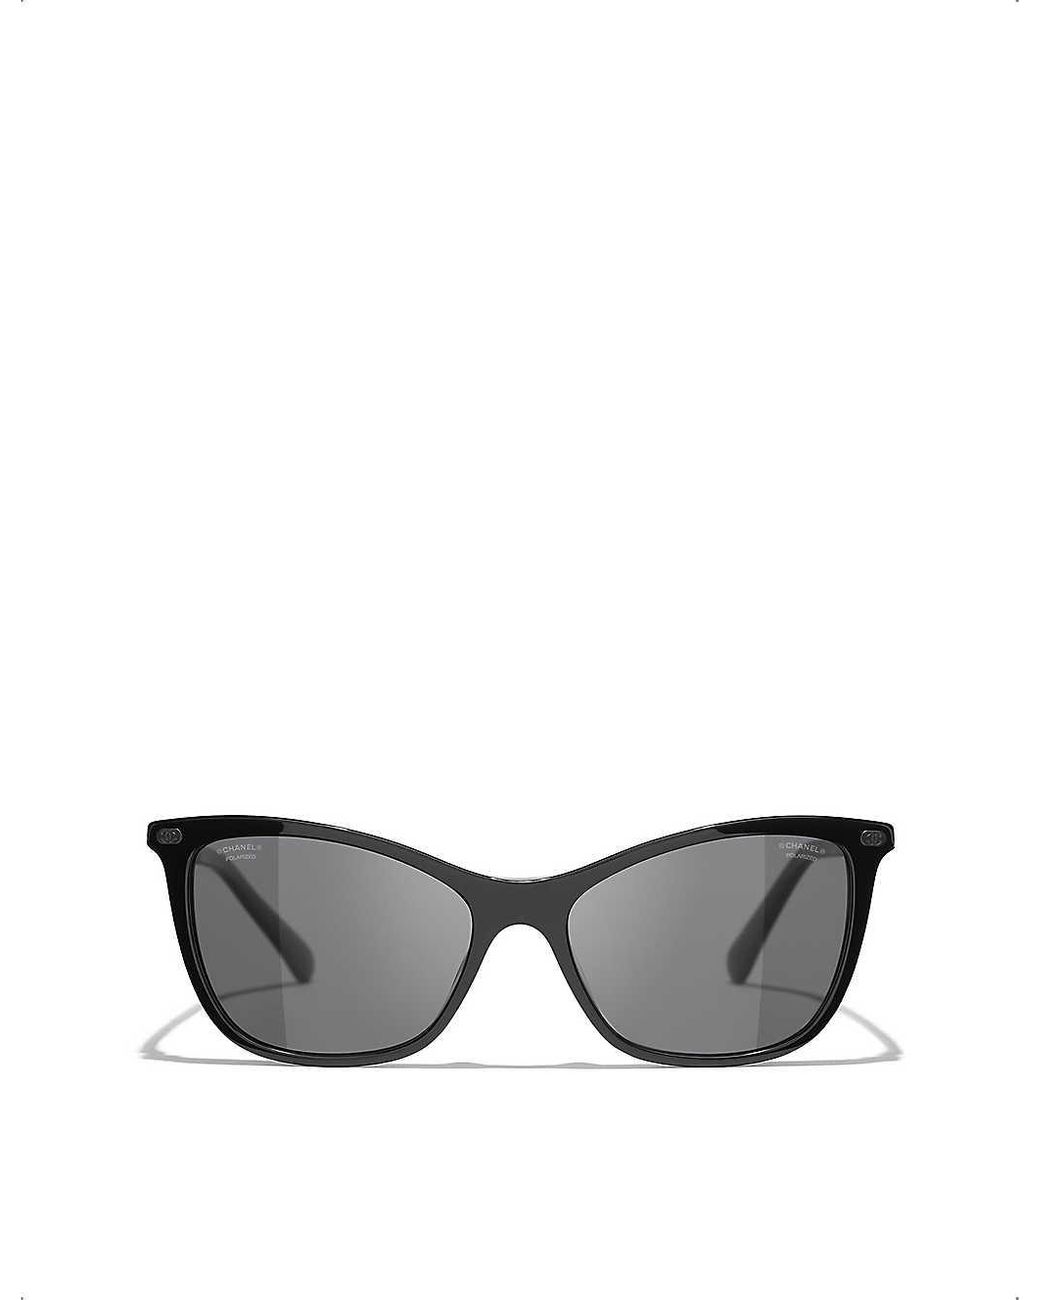 Chanel Cat Eye Sunglasses in Gray